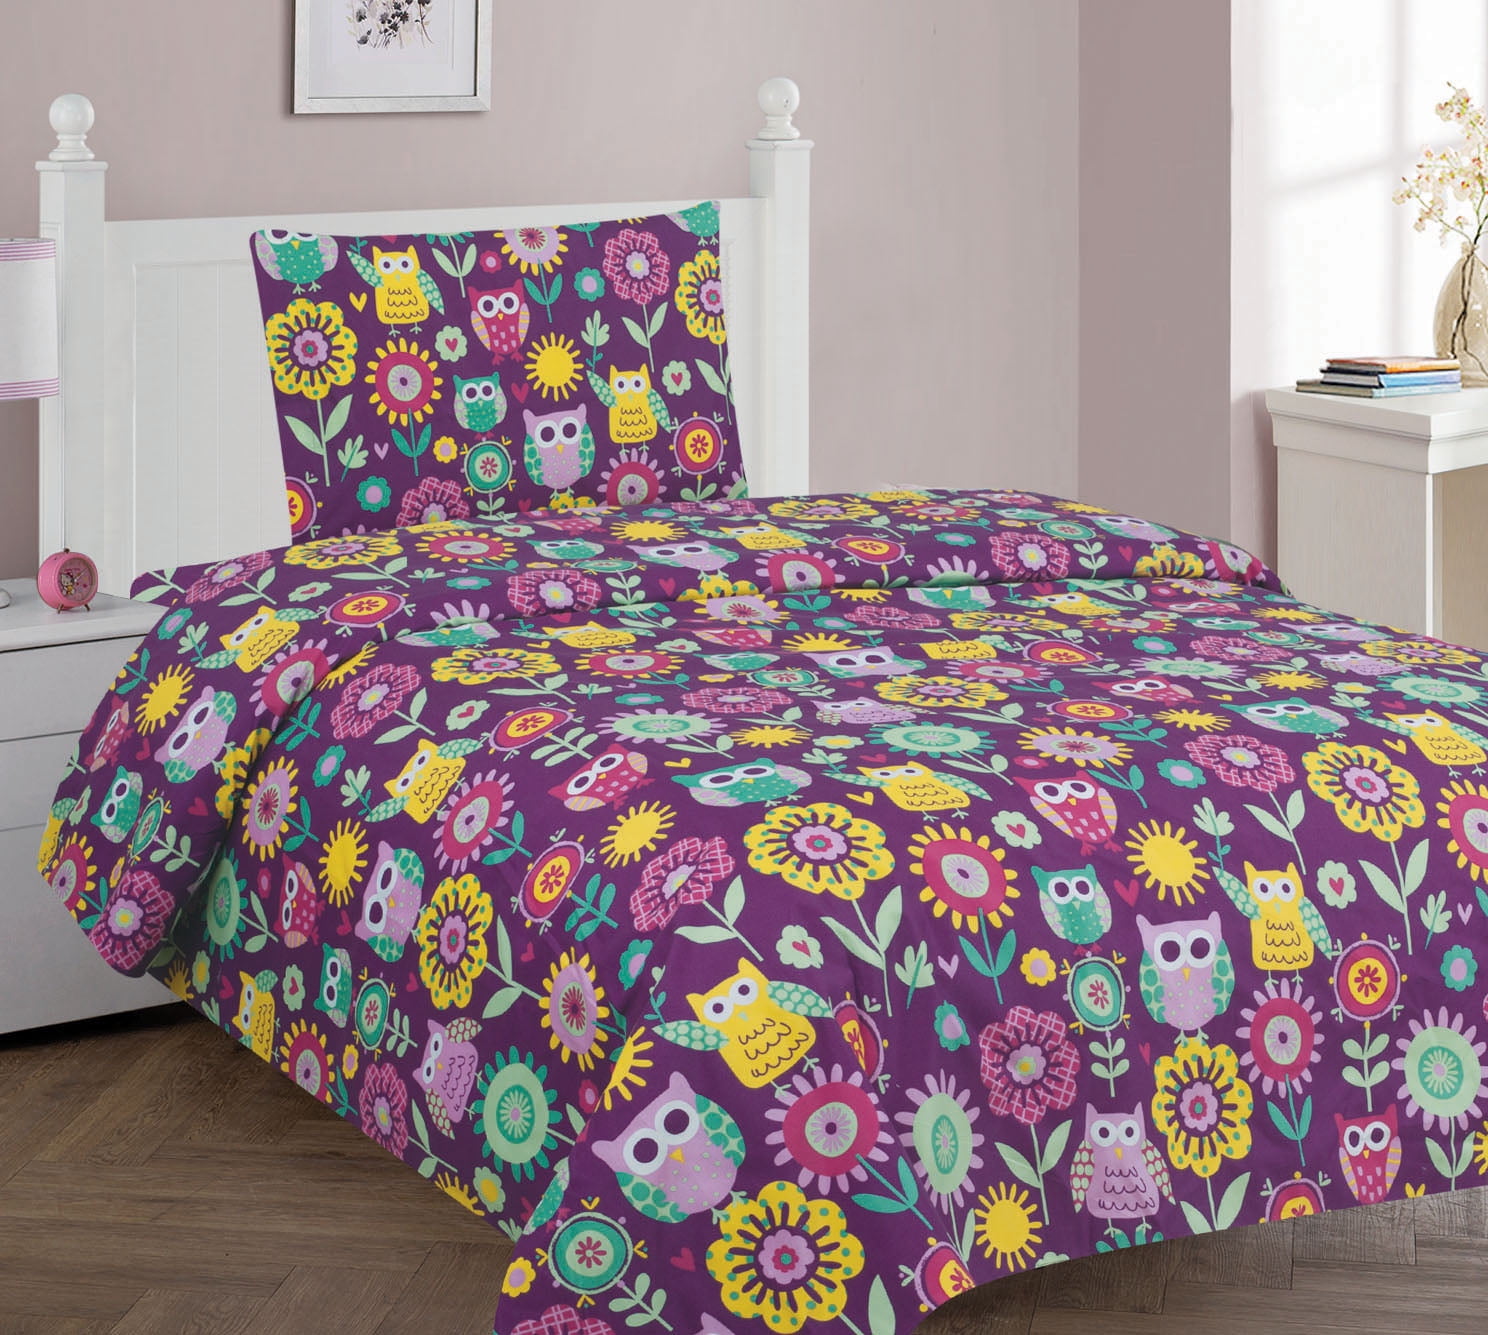 Pink-Purple Cotton Sheet Set:1 Fitted Sheet 1 Flat Sheet 2 Pillowcases All Sizes 